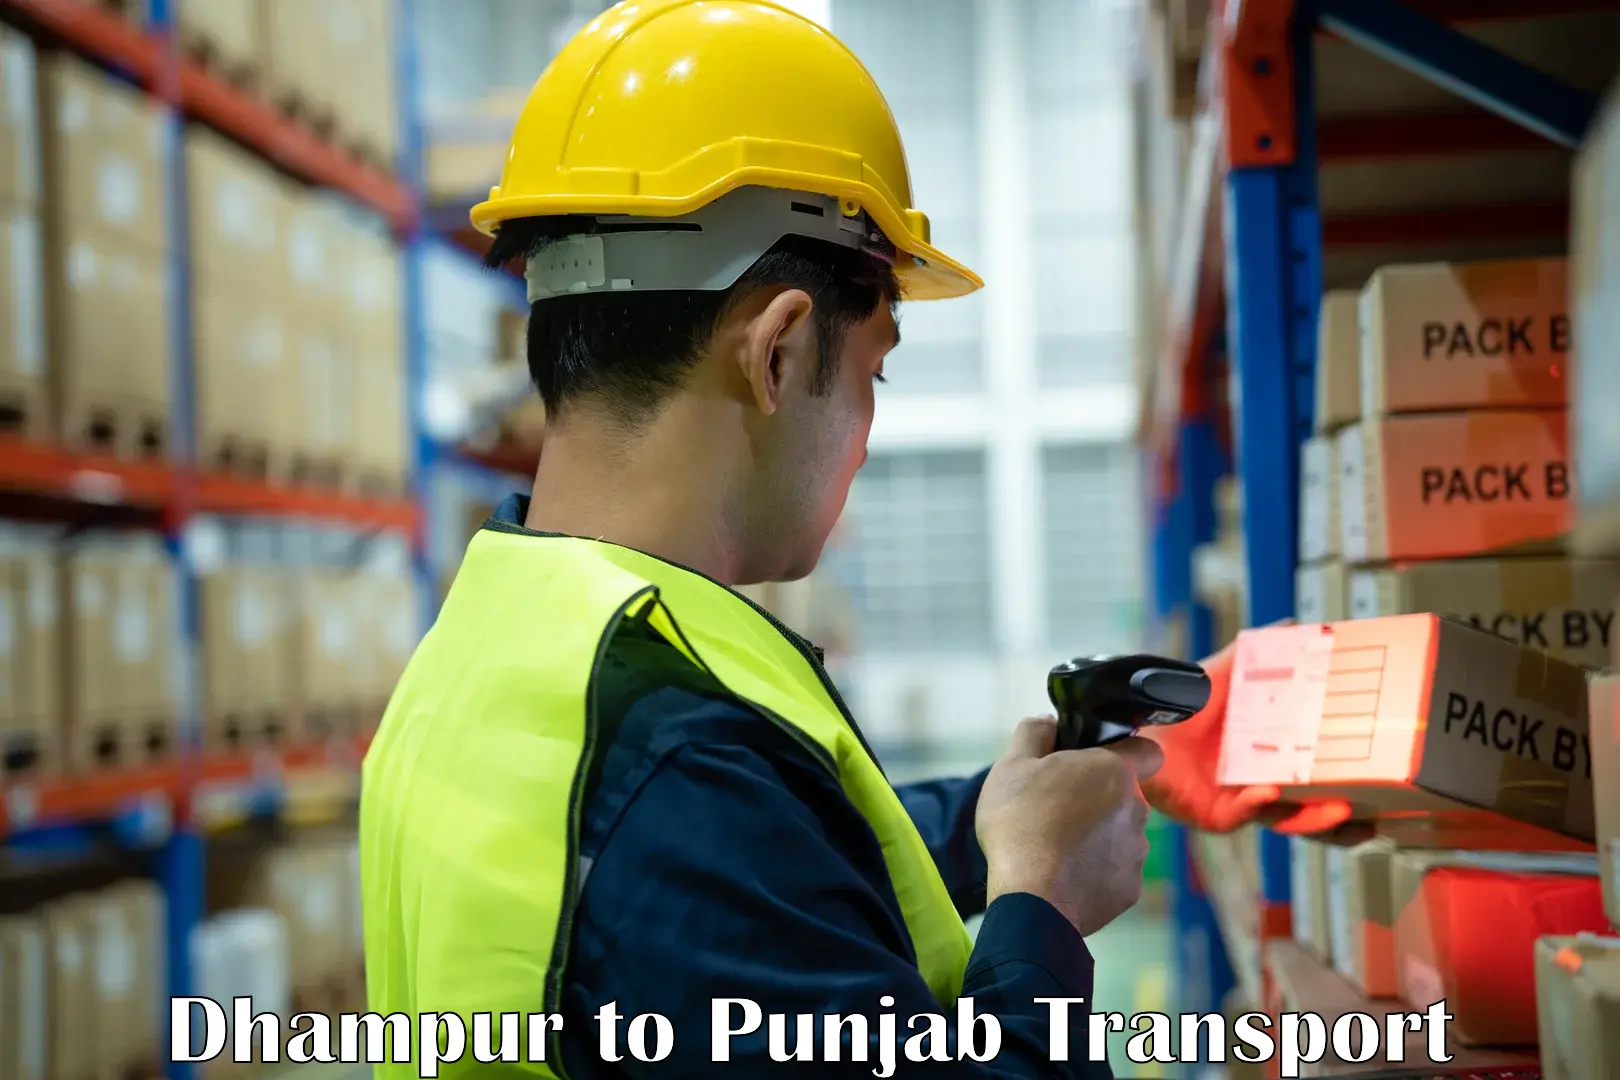 Shipping partner Dhampur to Garhshankar